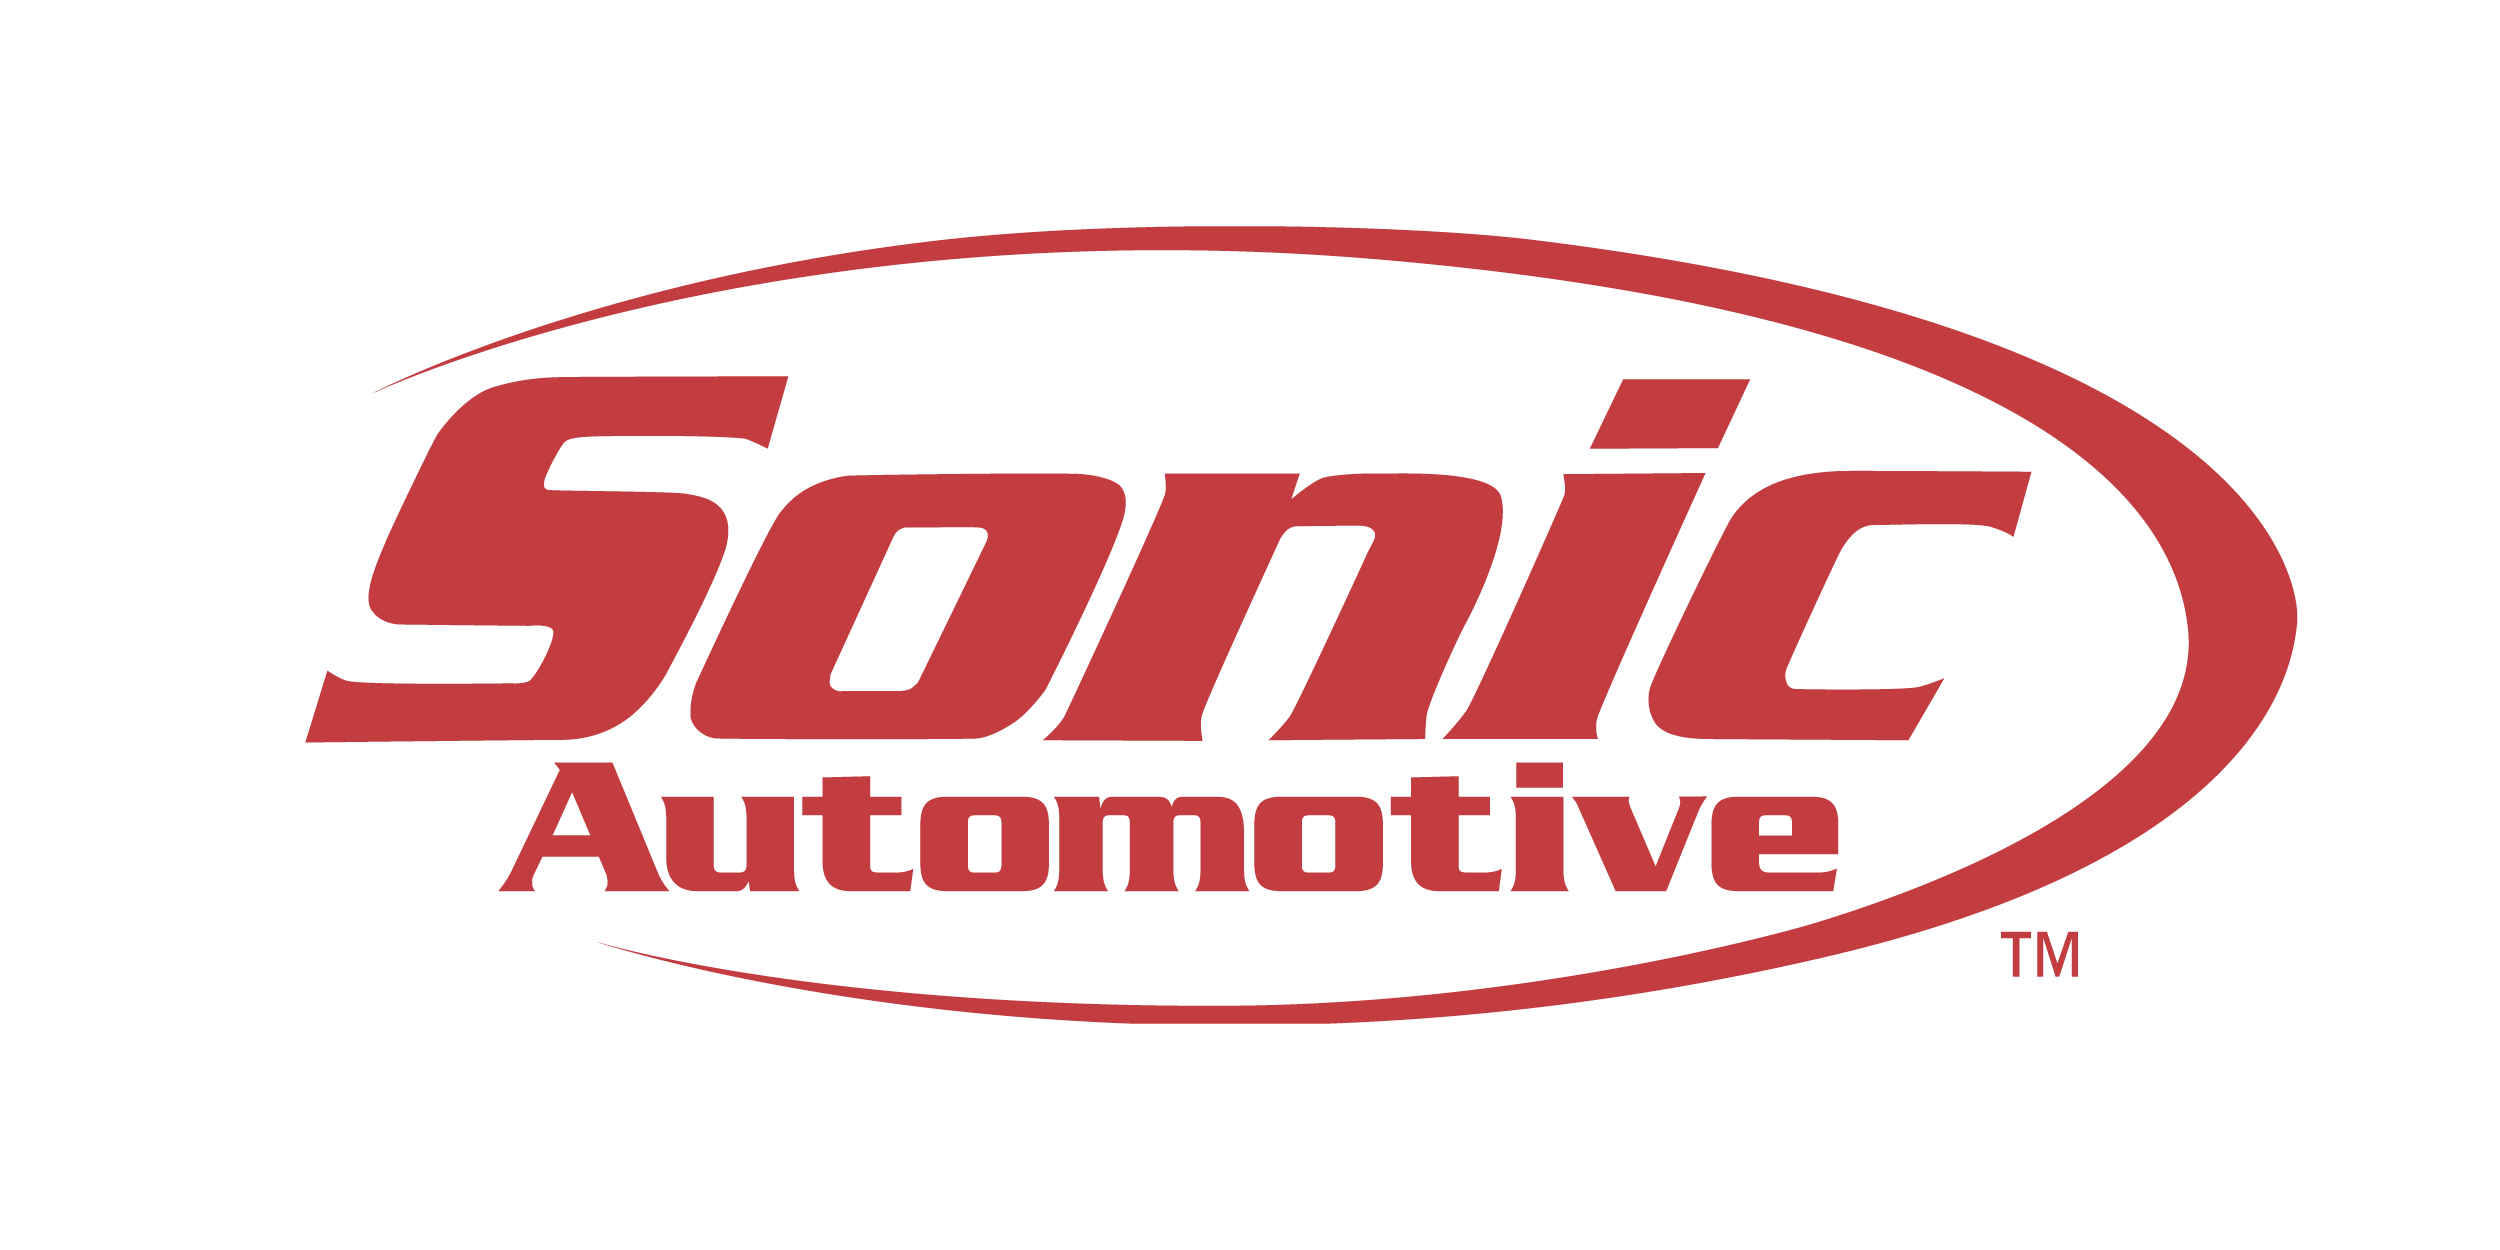 north carolina companies fortune 500 list sonic automotive